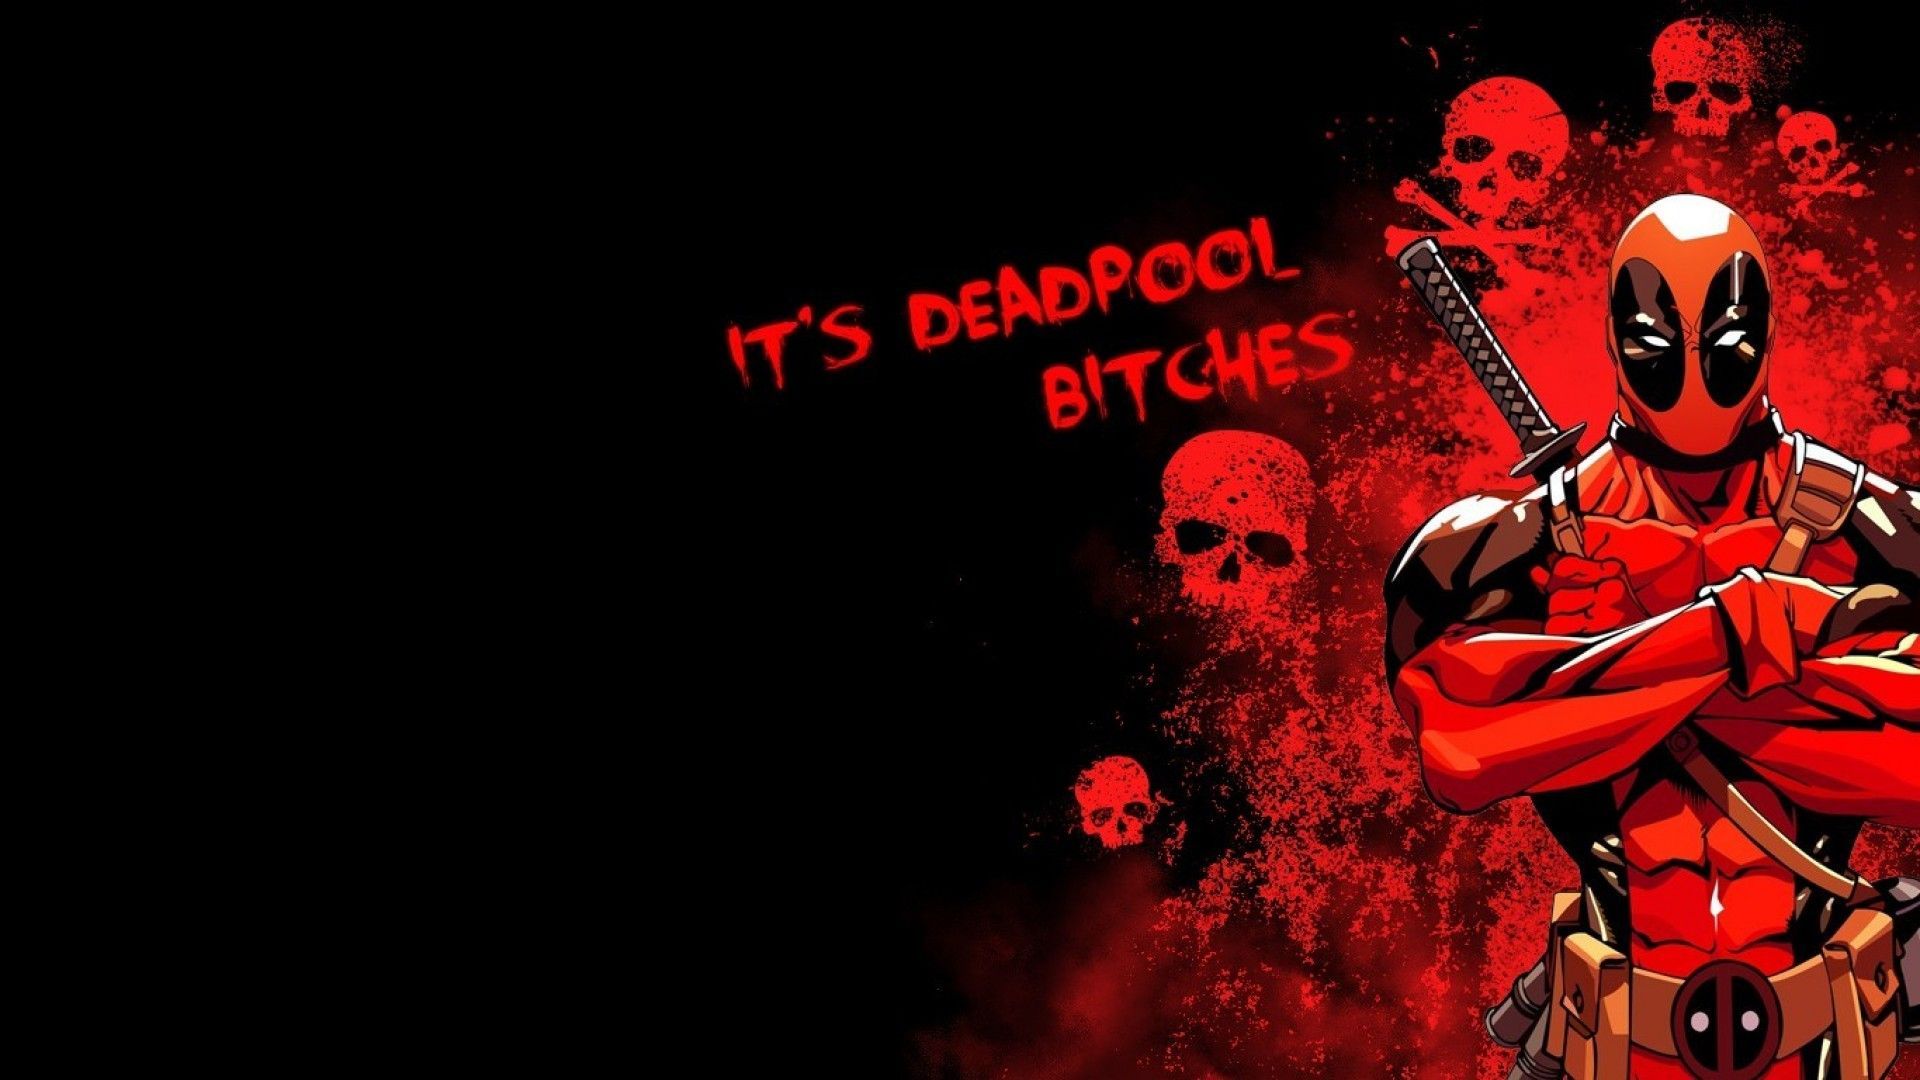 718 Deadpool HD Wallpapers | Backgrounds - Wallpaper Abyss